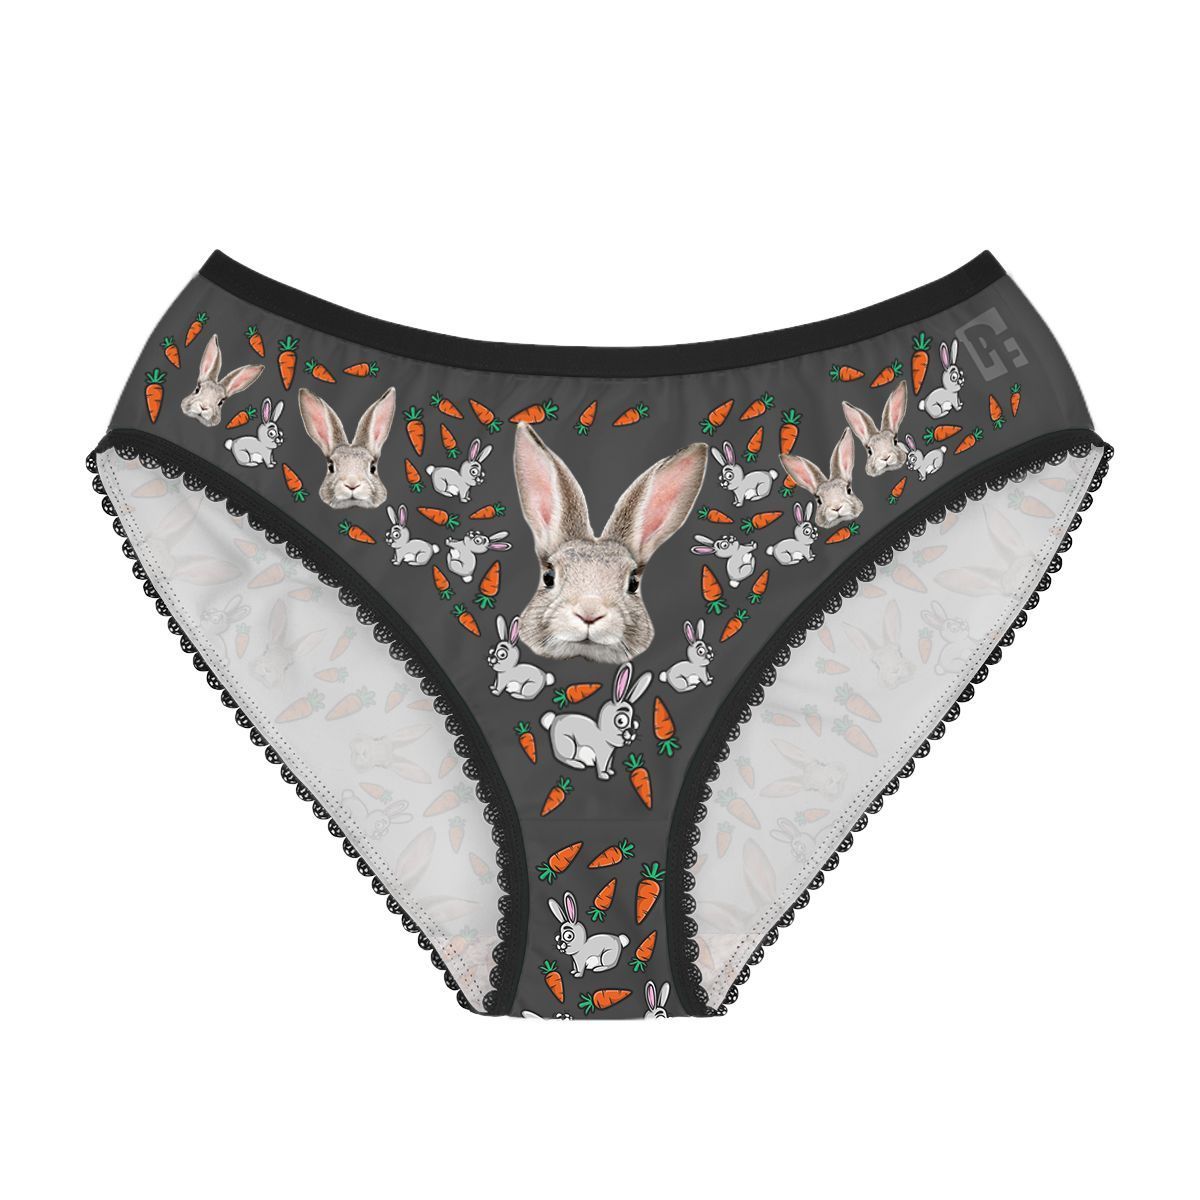 Dark Bunny women's underwear briefs personalized with photo printed on them